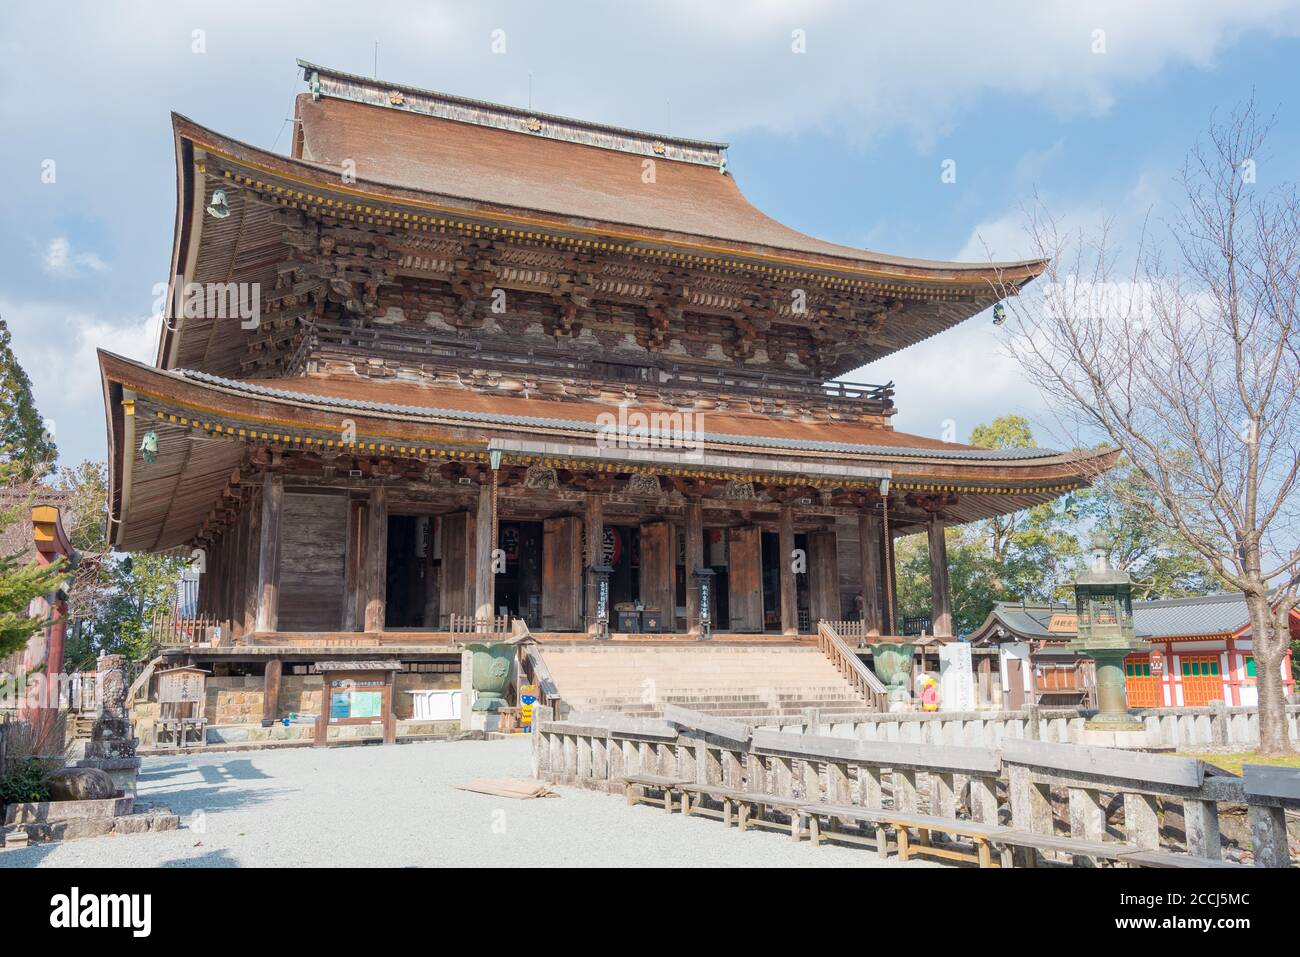 Kimpusen-ji Temple in Yoshino, Nara, Japan. It is part of UNESCO World Heritage Site - Sacred Sites and Pilgrimage Routes in the Kii Mountain Range. Stock Photo